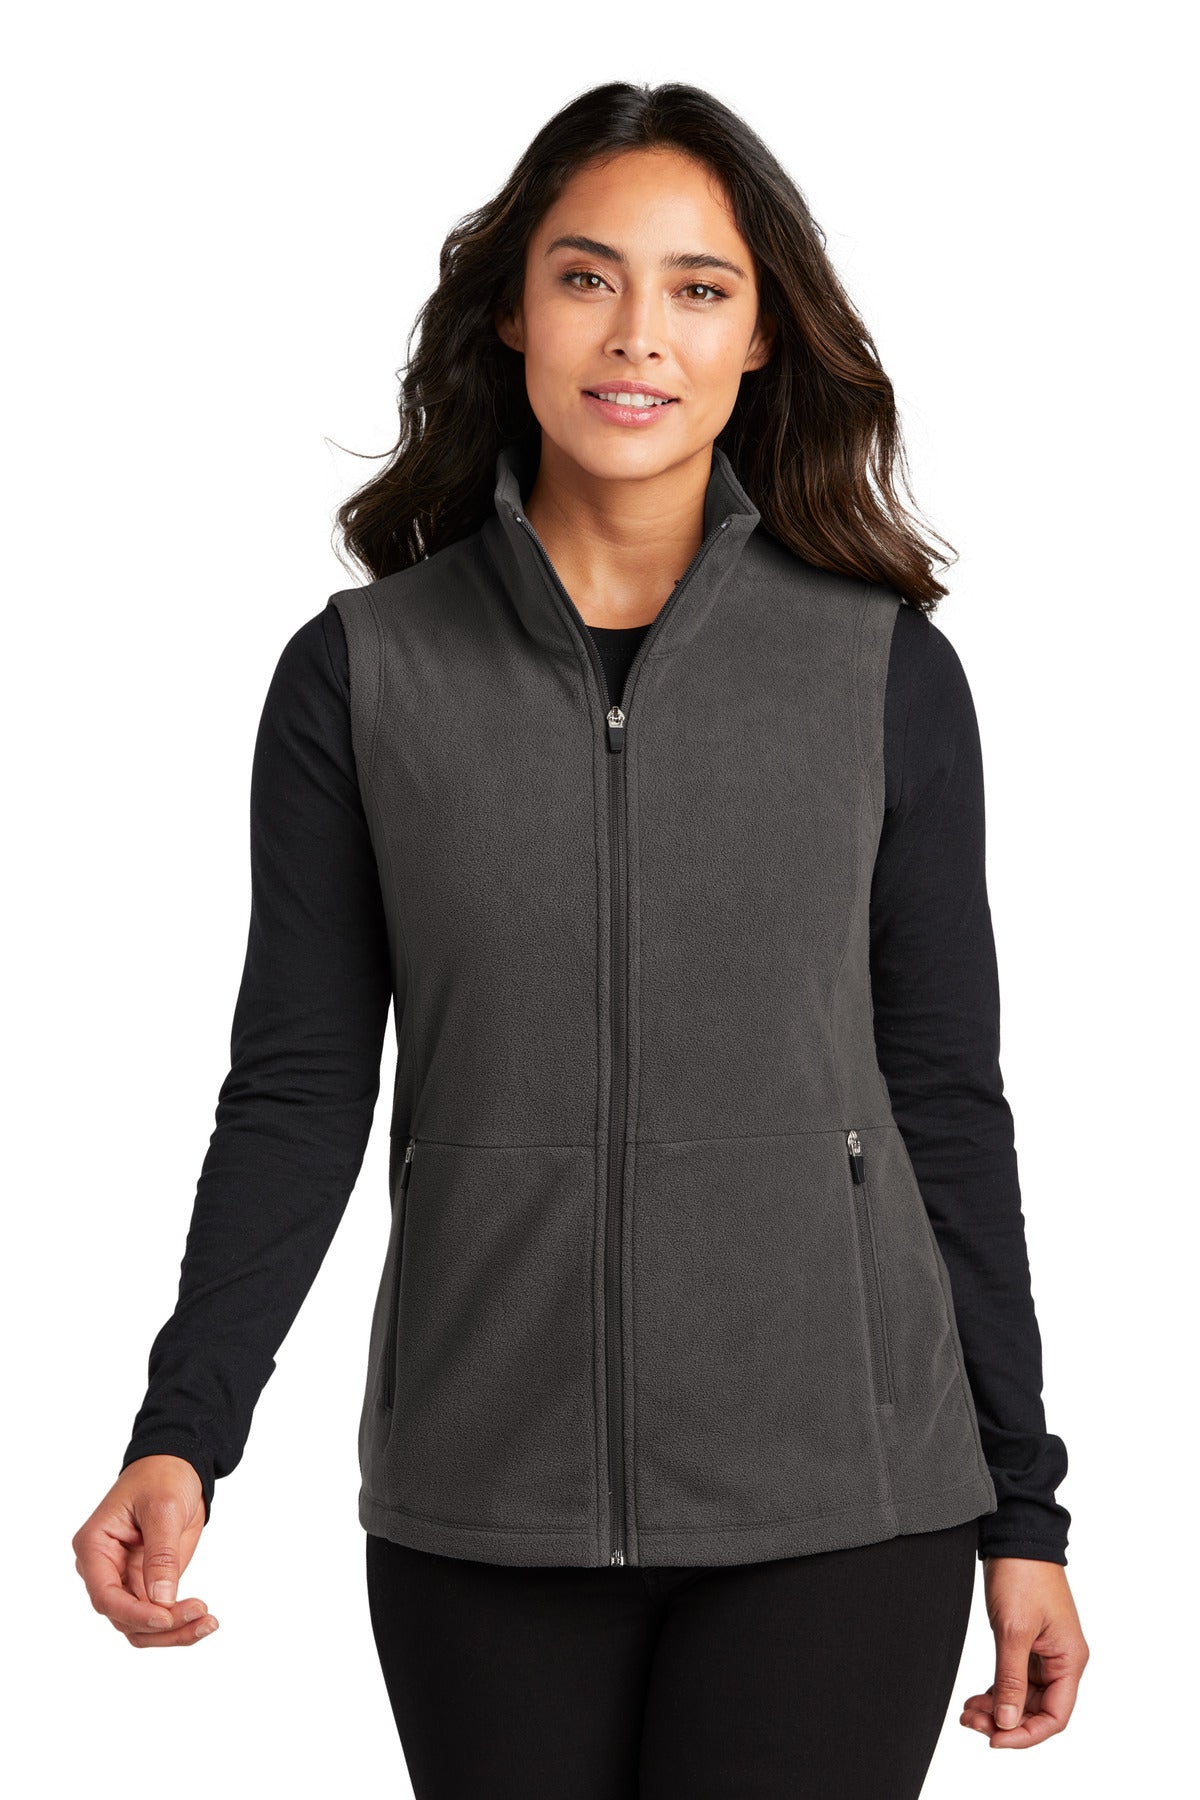 Team Truth StandsPort Authority® Ladies Accord Microfleece Vest L152